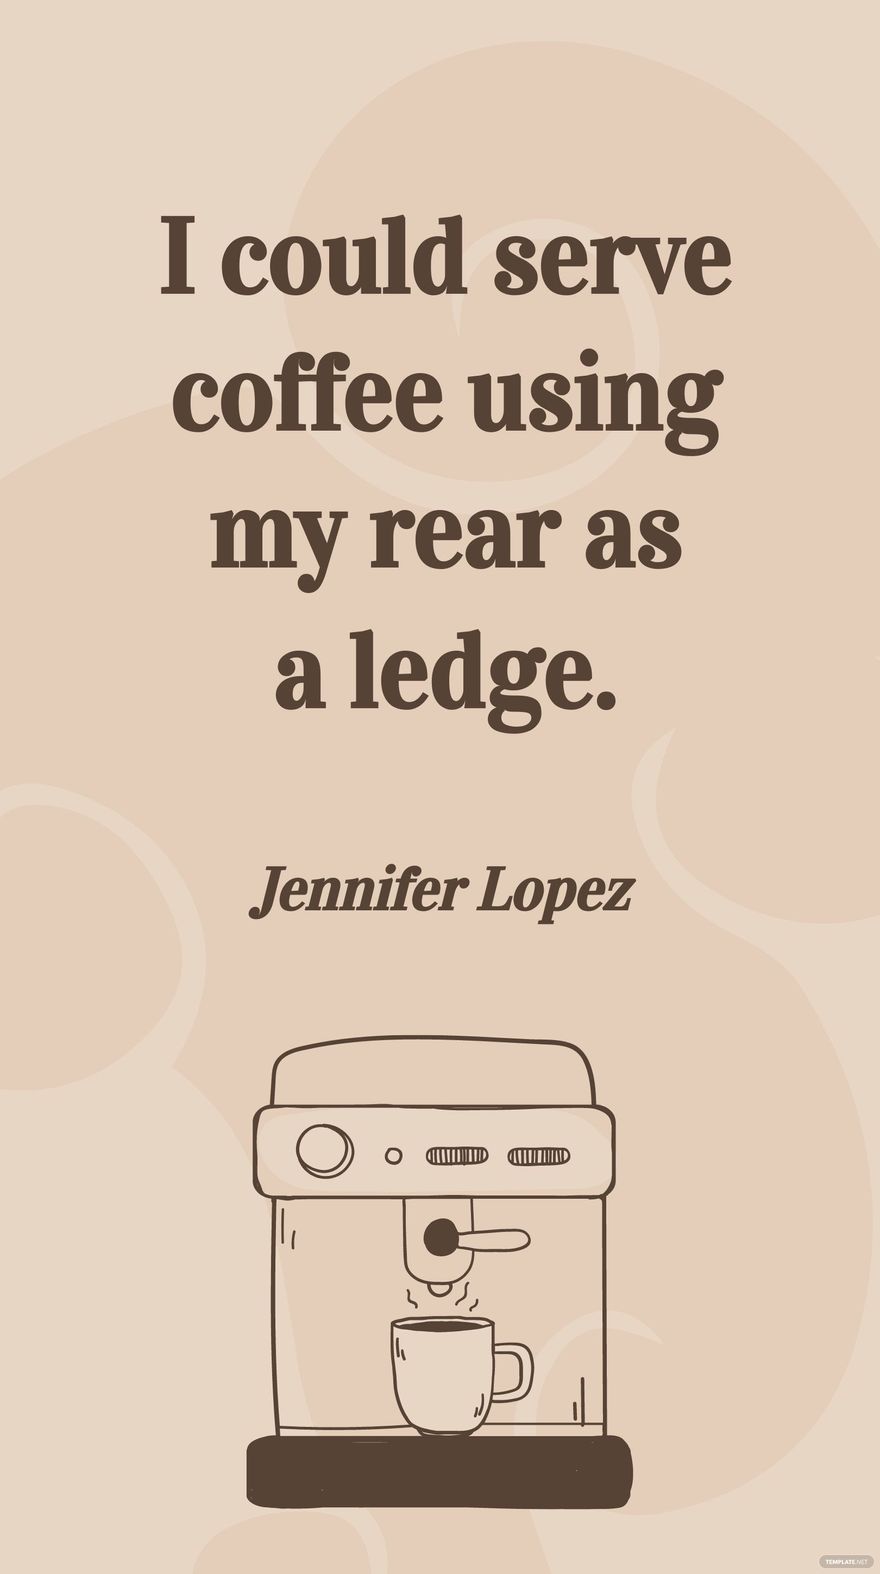 Jennifer Lopez - I could serve coffee using my rear as a ledge.